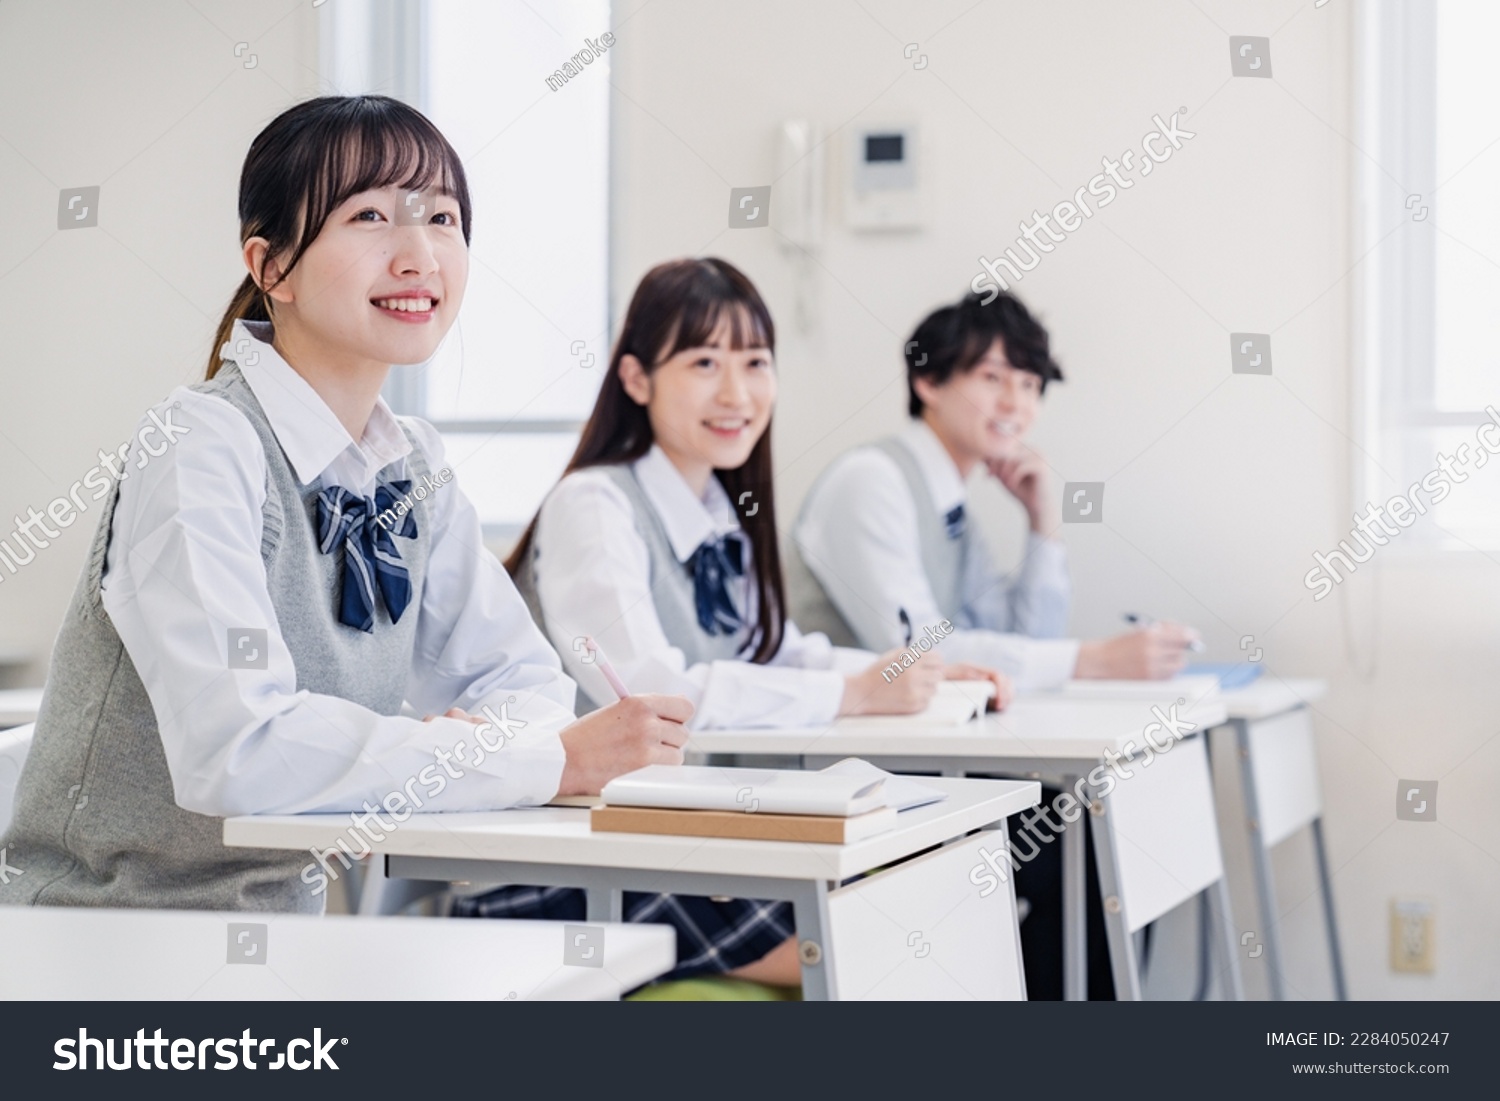 High school students enjoying class in a classroom #2284050247